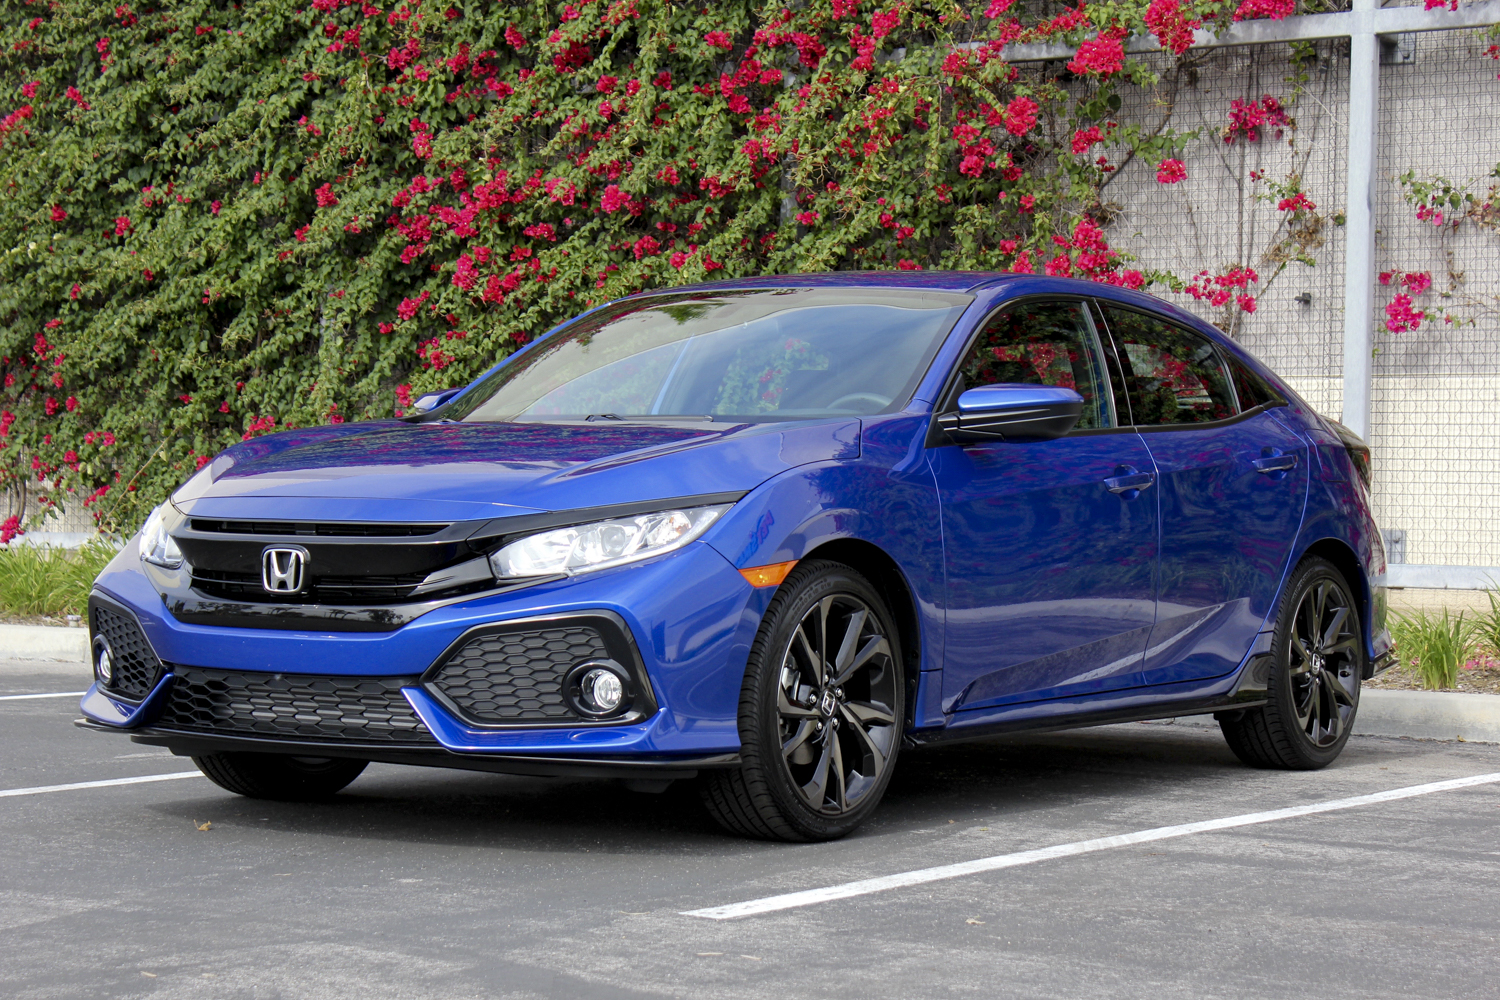 Used Honda Civic Hatchback (2017 - 2022) Review